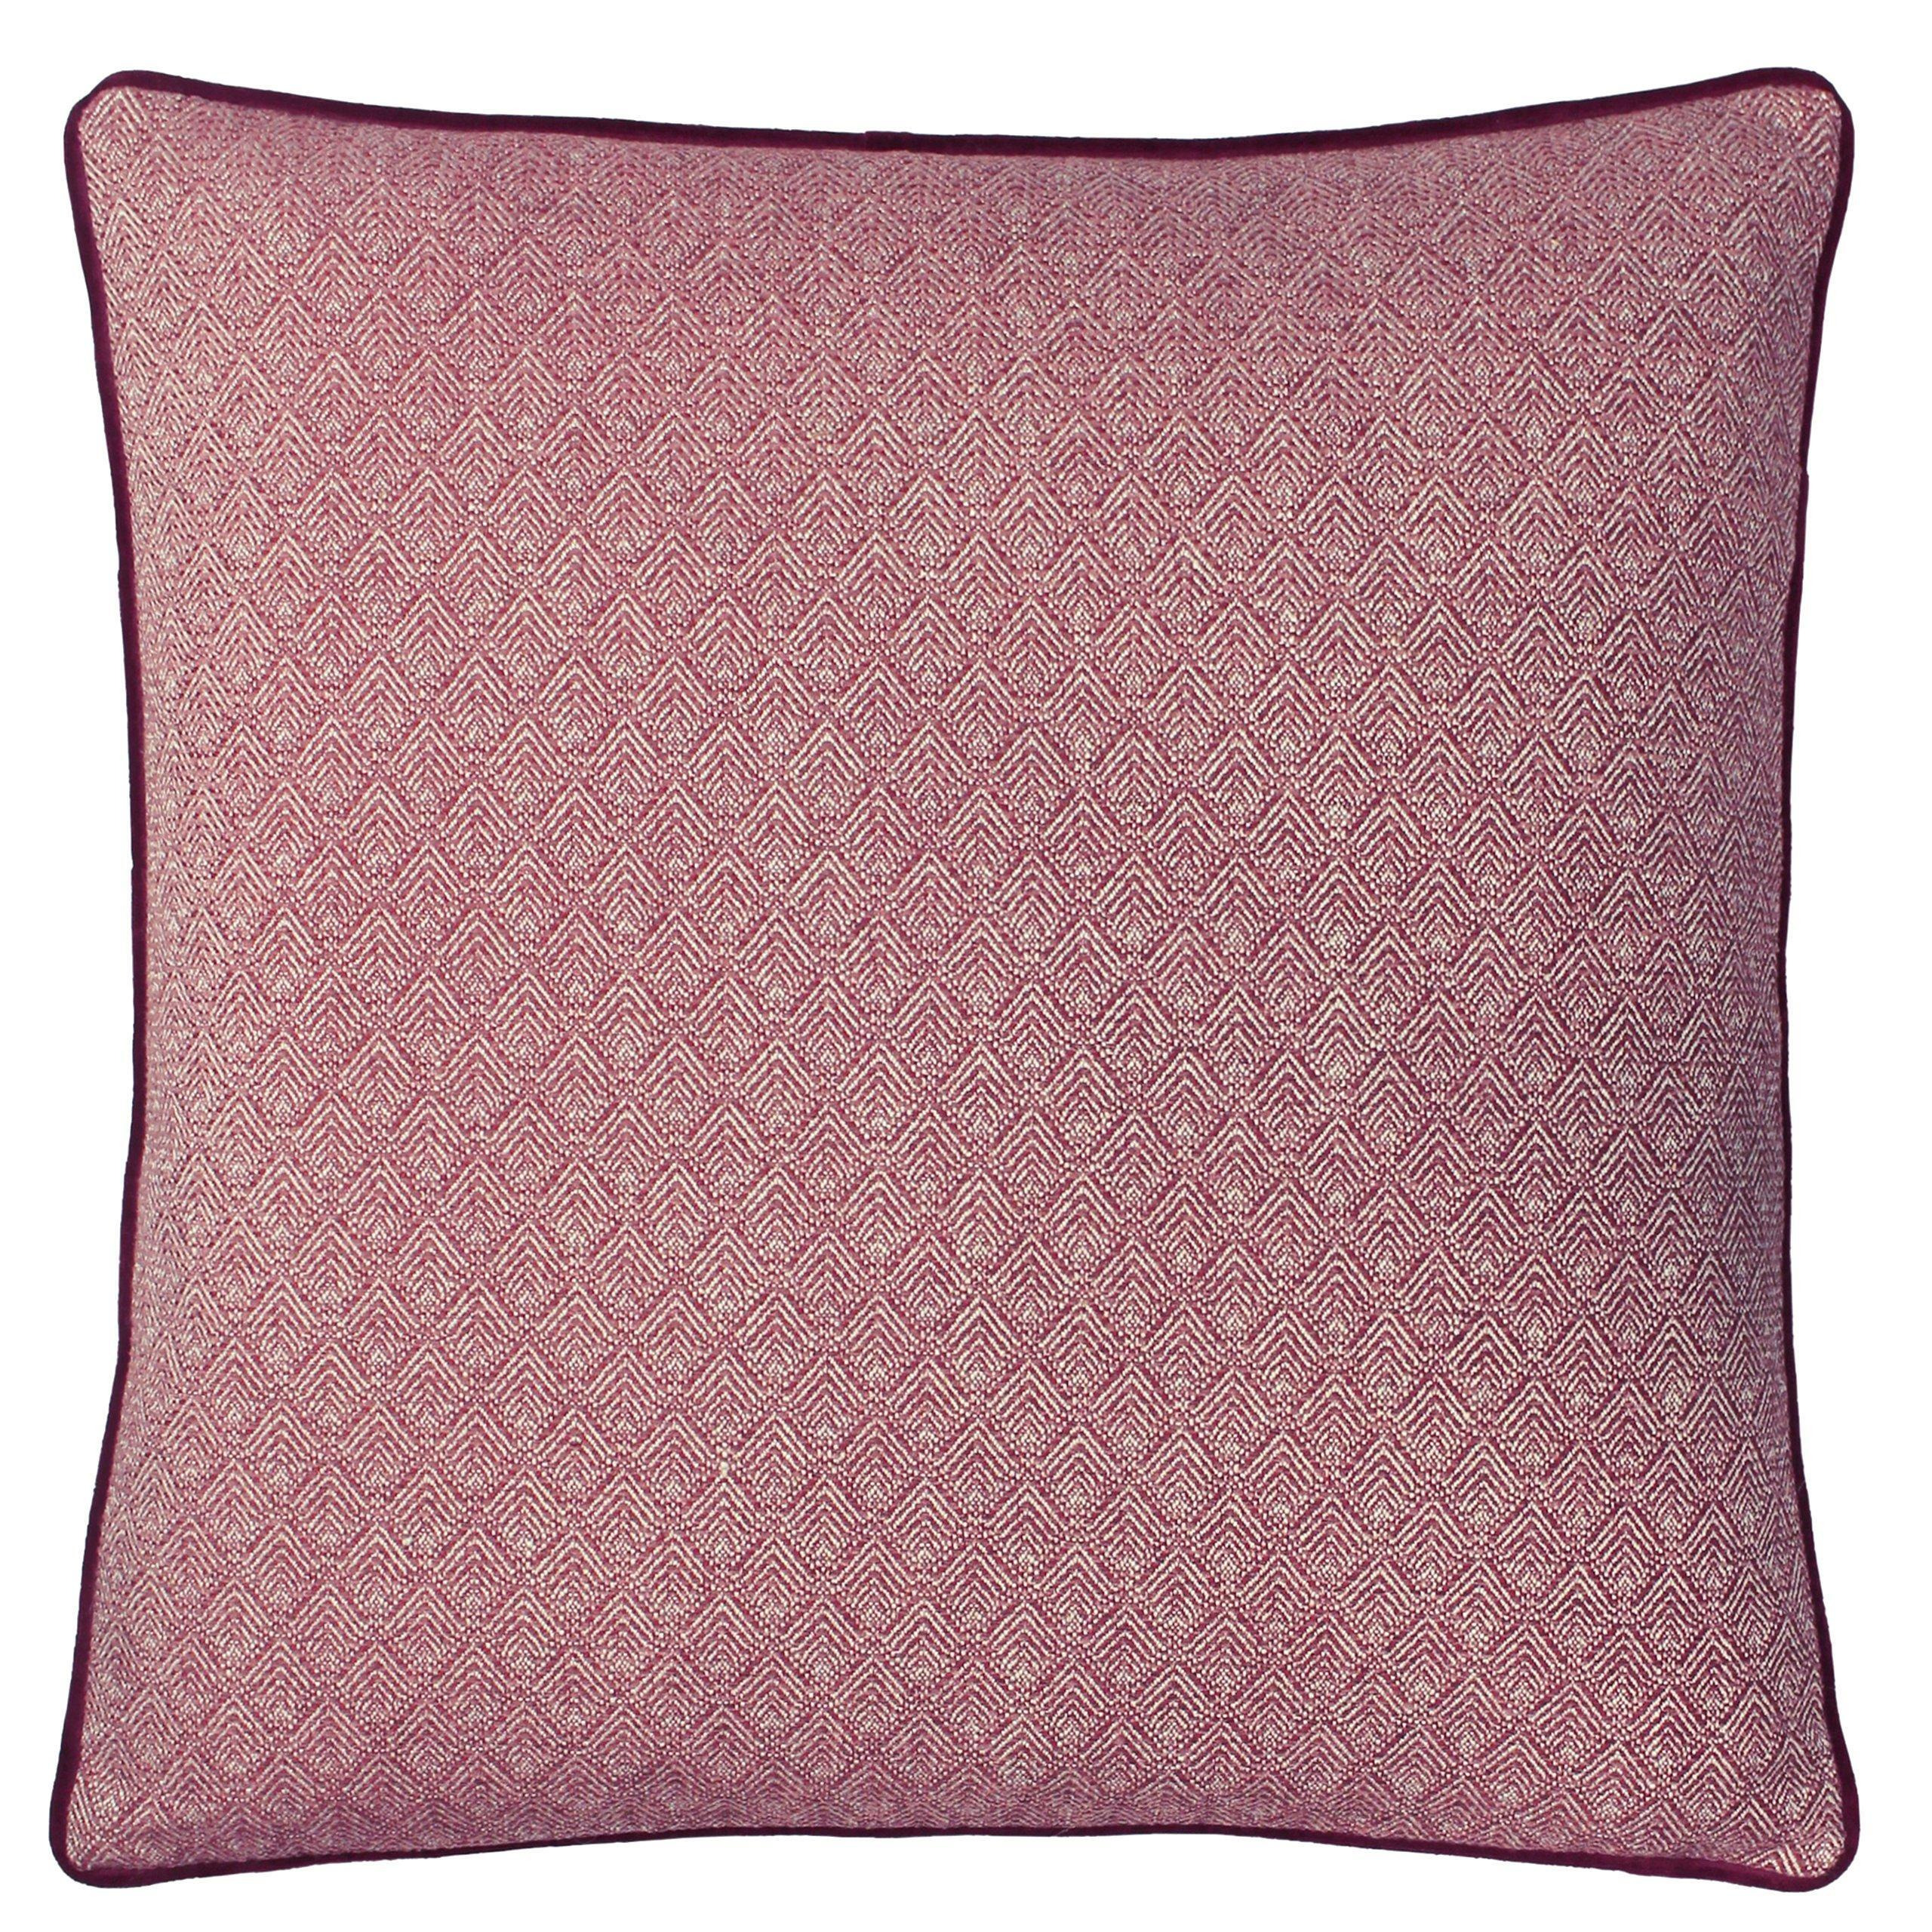 Blenheim Geometric Cushion - image 1